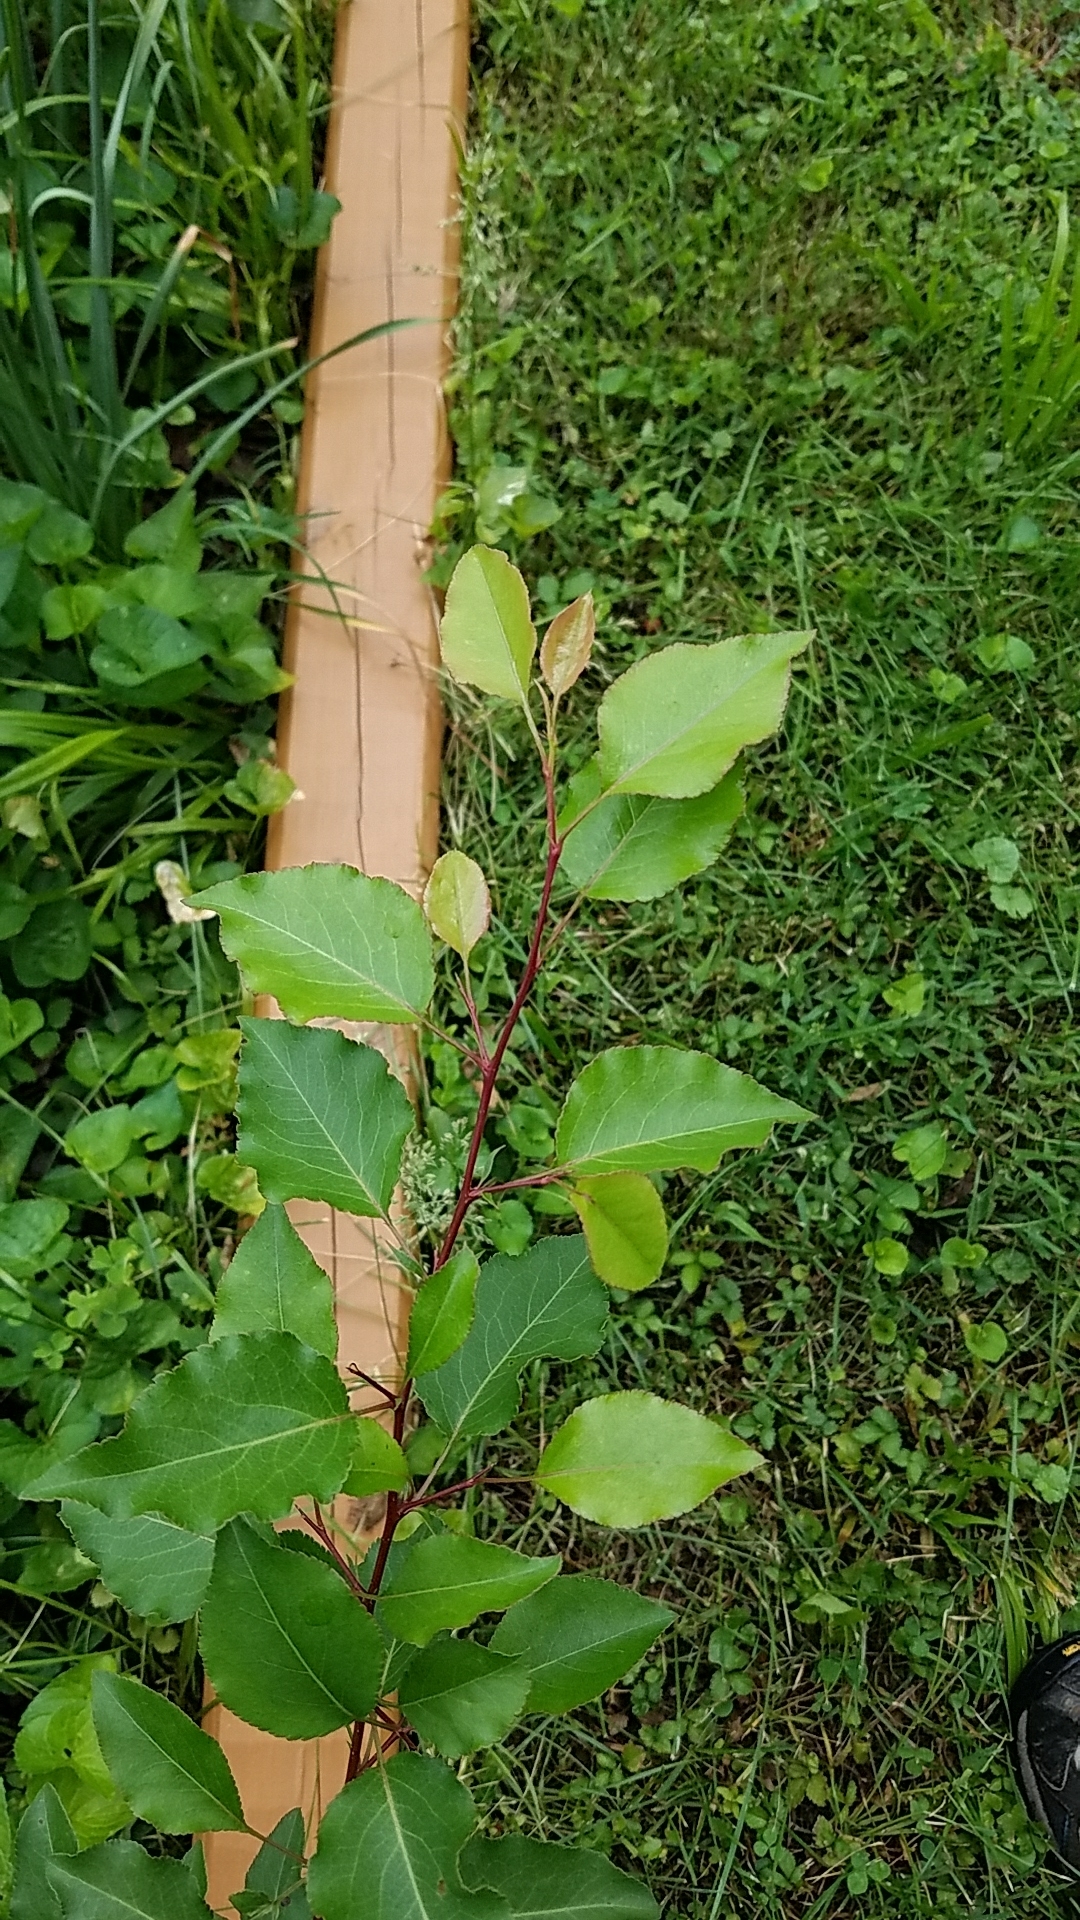 pear tree identification by leaf